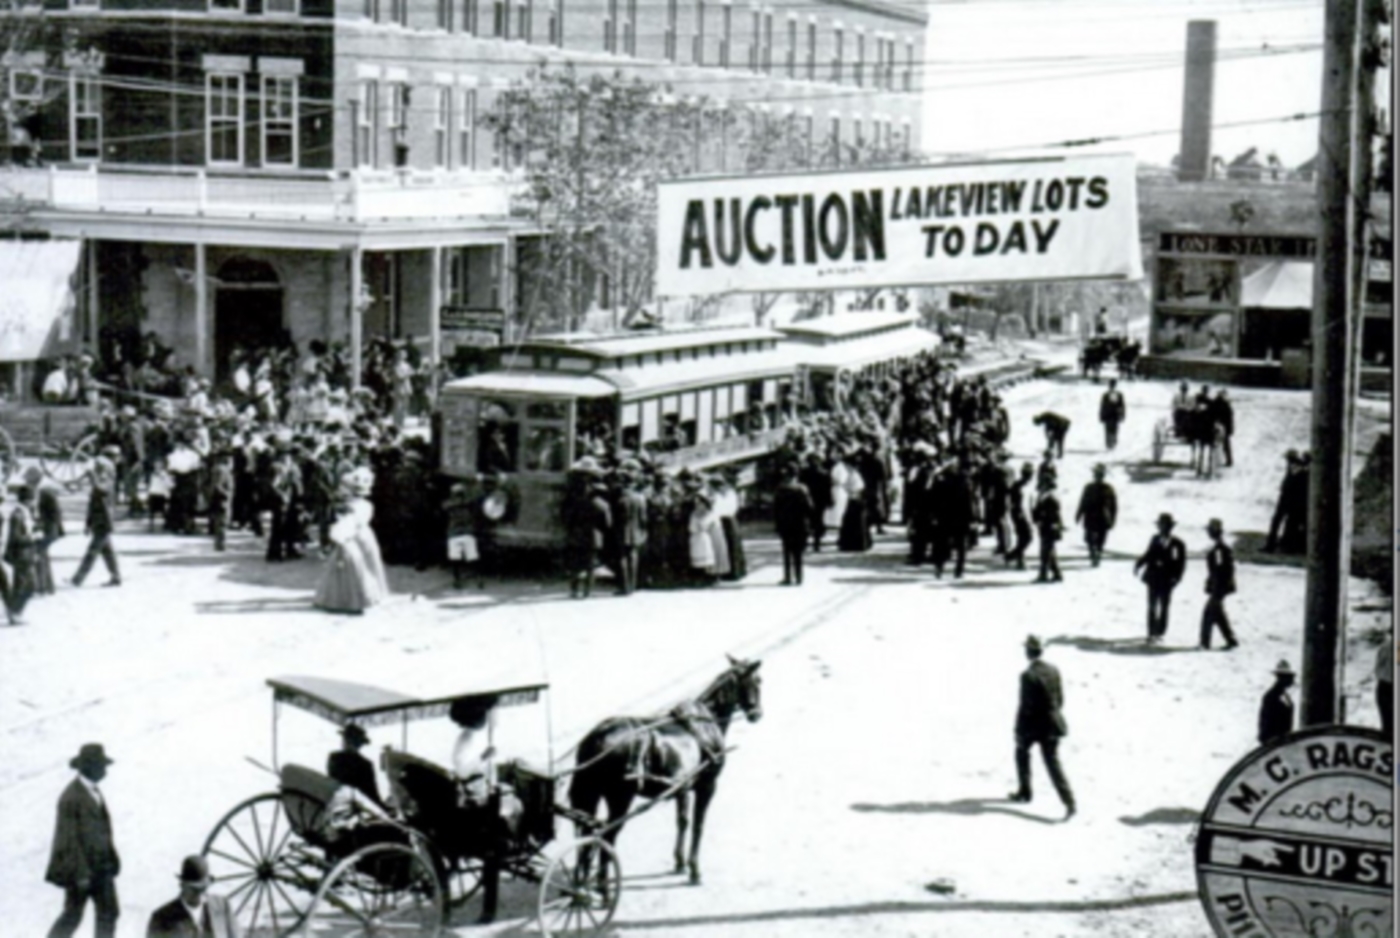 San Angelo Trolley in 1908